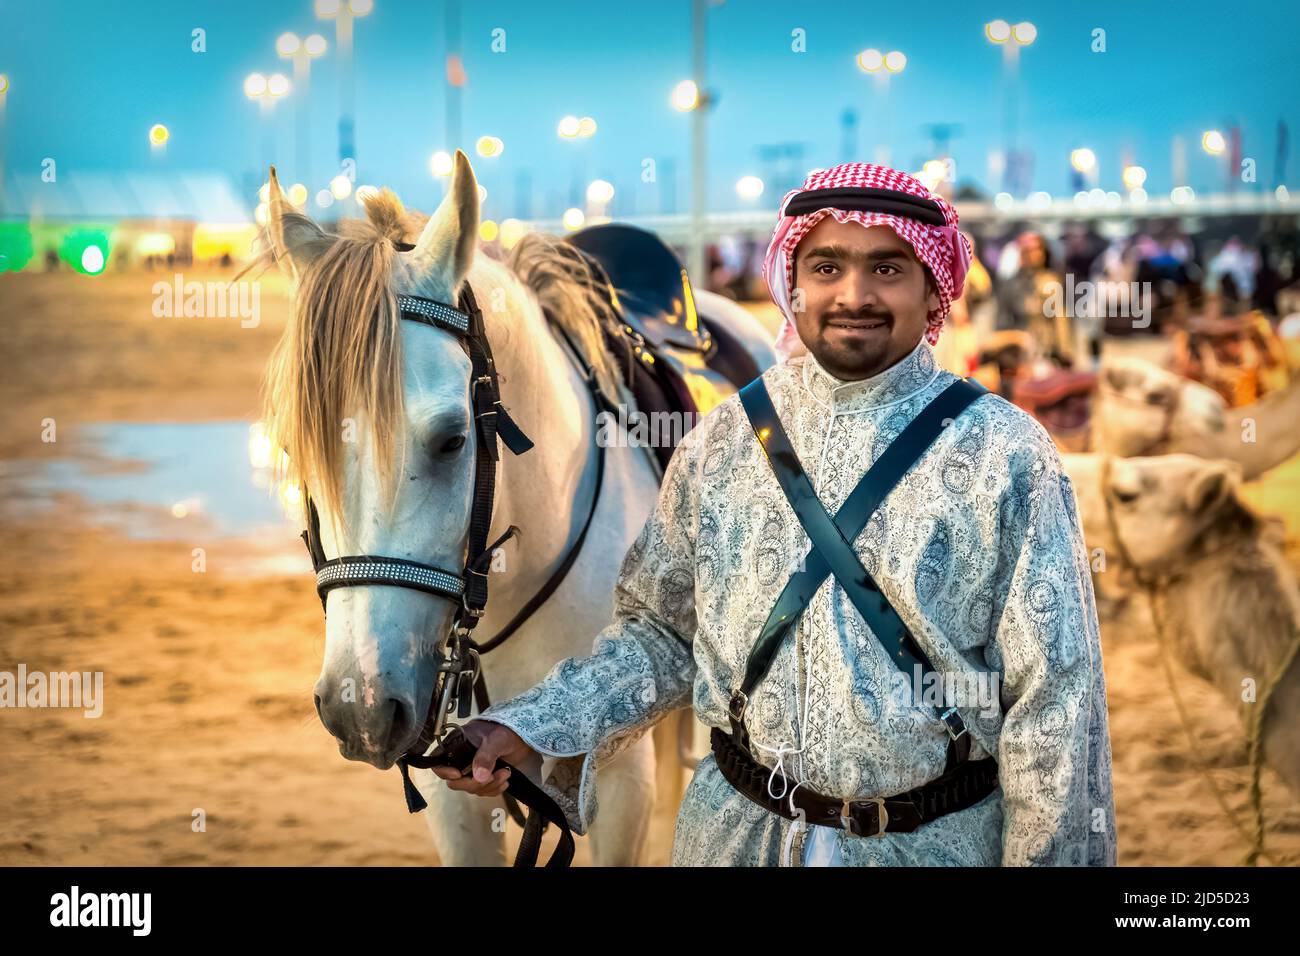 Arab national horse rider in portrait view. Clicked at Abqaiq Desert Safari festival Saudi Arabia Stock Photo